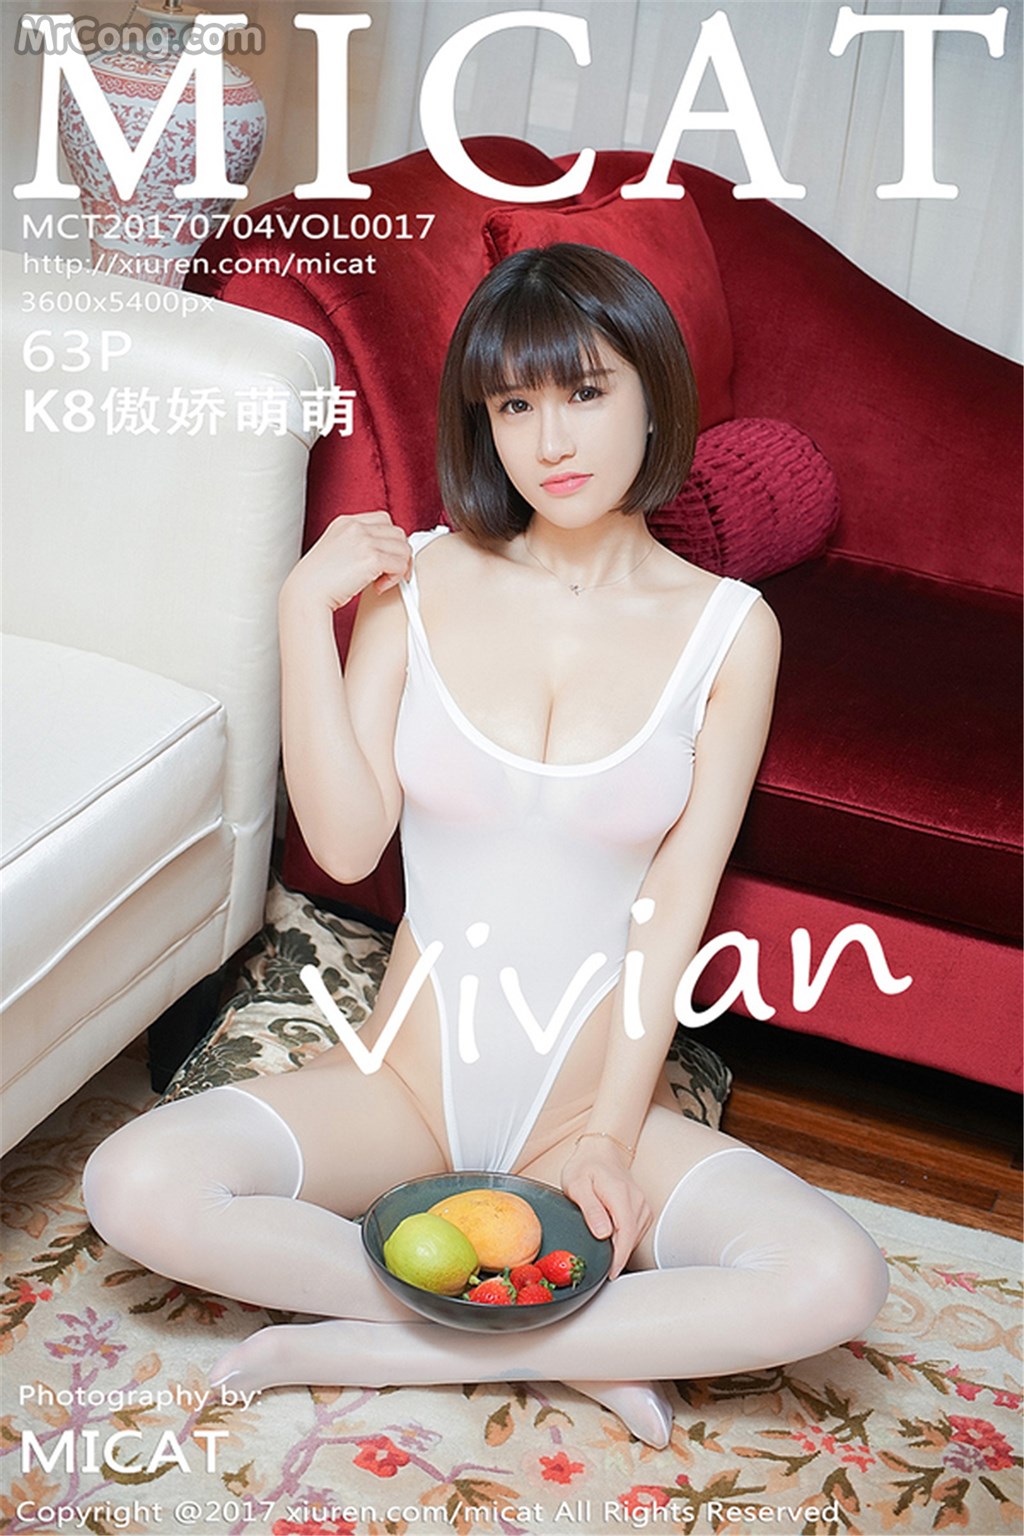 MiCat Vol.017: Model Aojiao Meng Meng (K8 傲 娇 萌萌 Vivian) (64 photos)